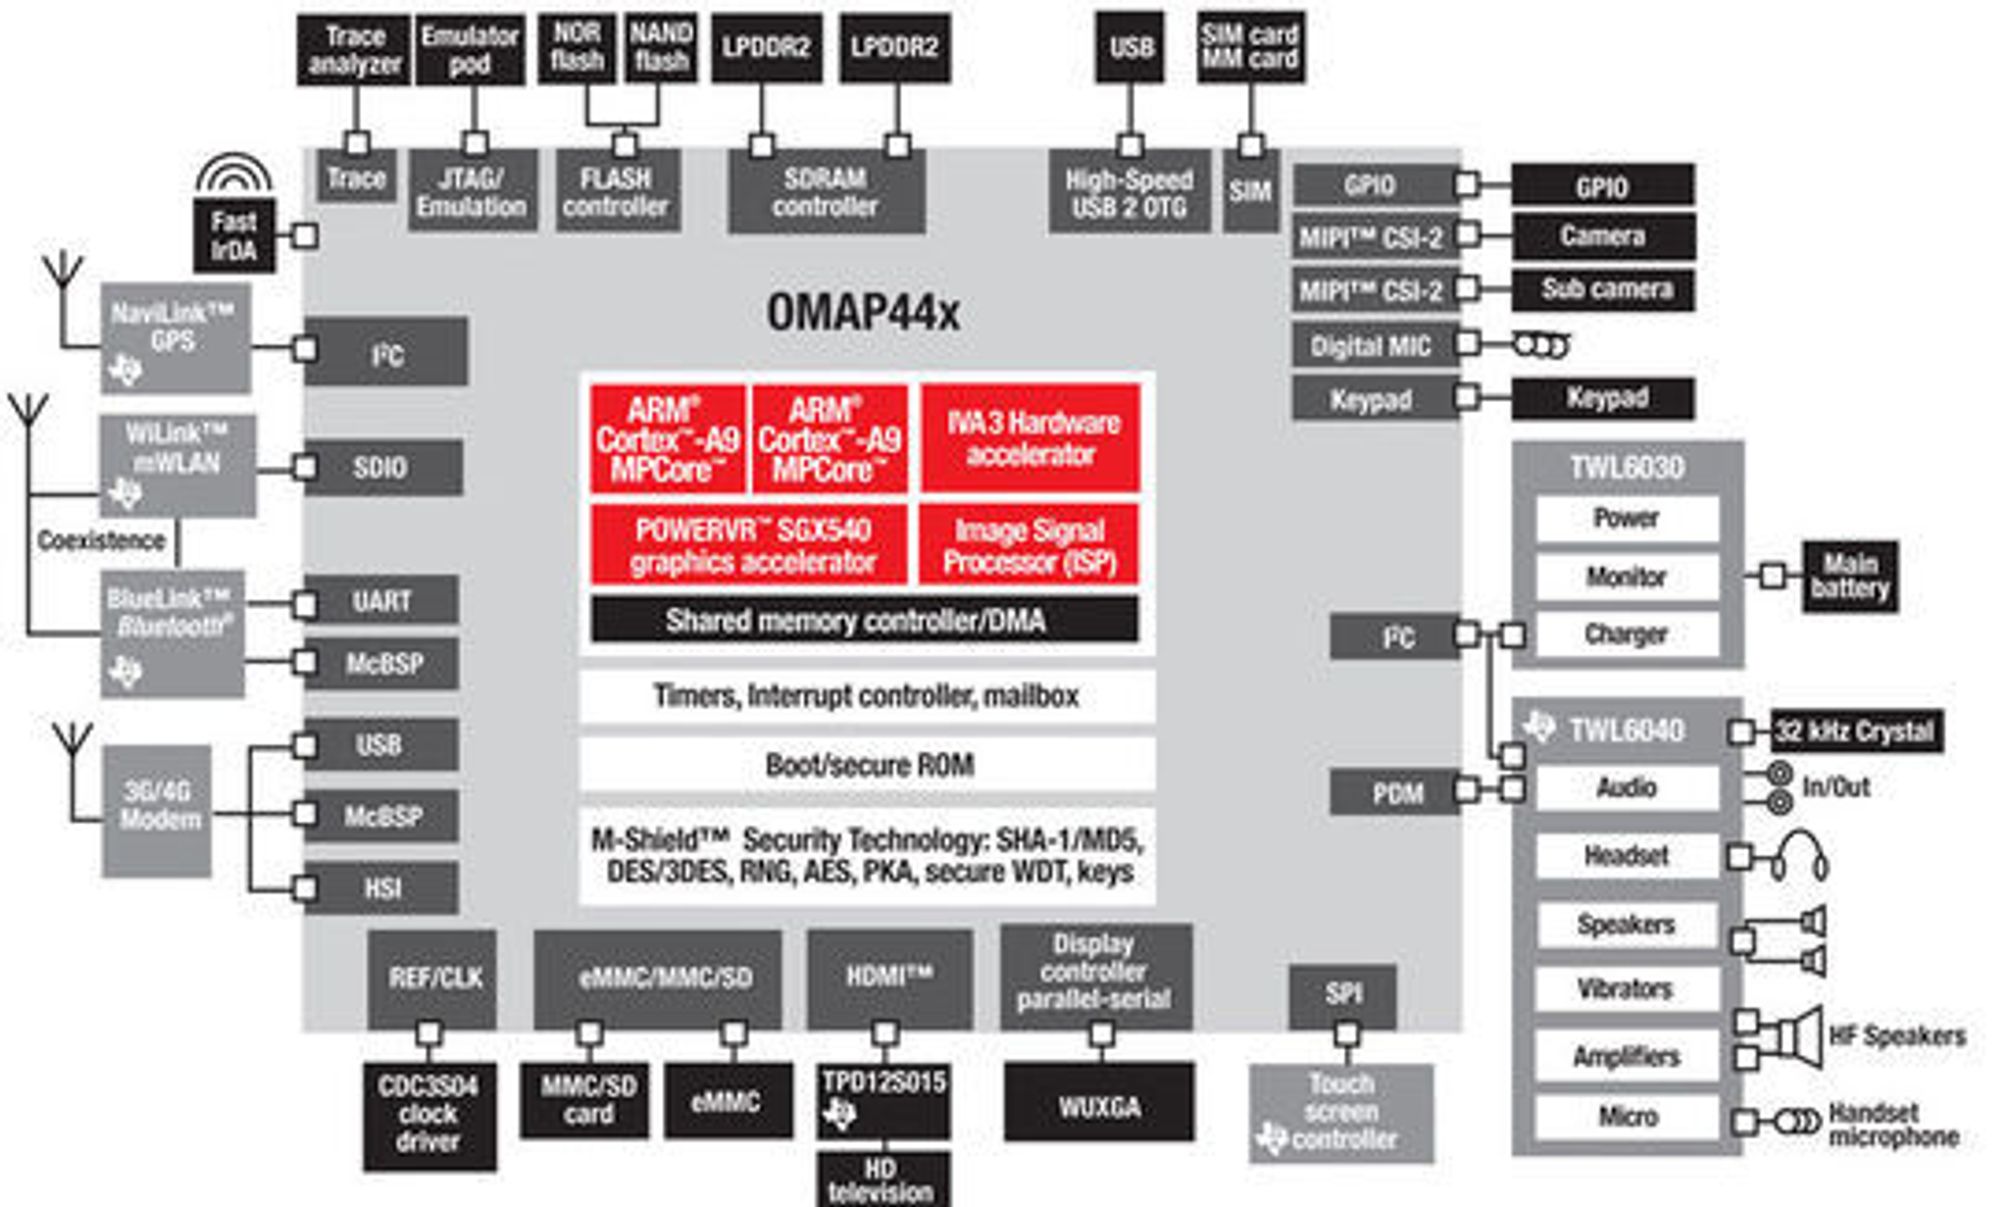 Blokkdiagram over systembrikker i Texas Instruments' OMAP44xx-serie.